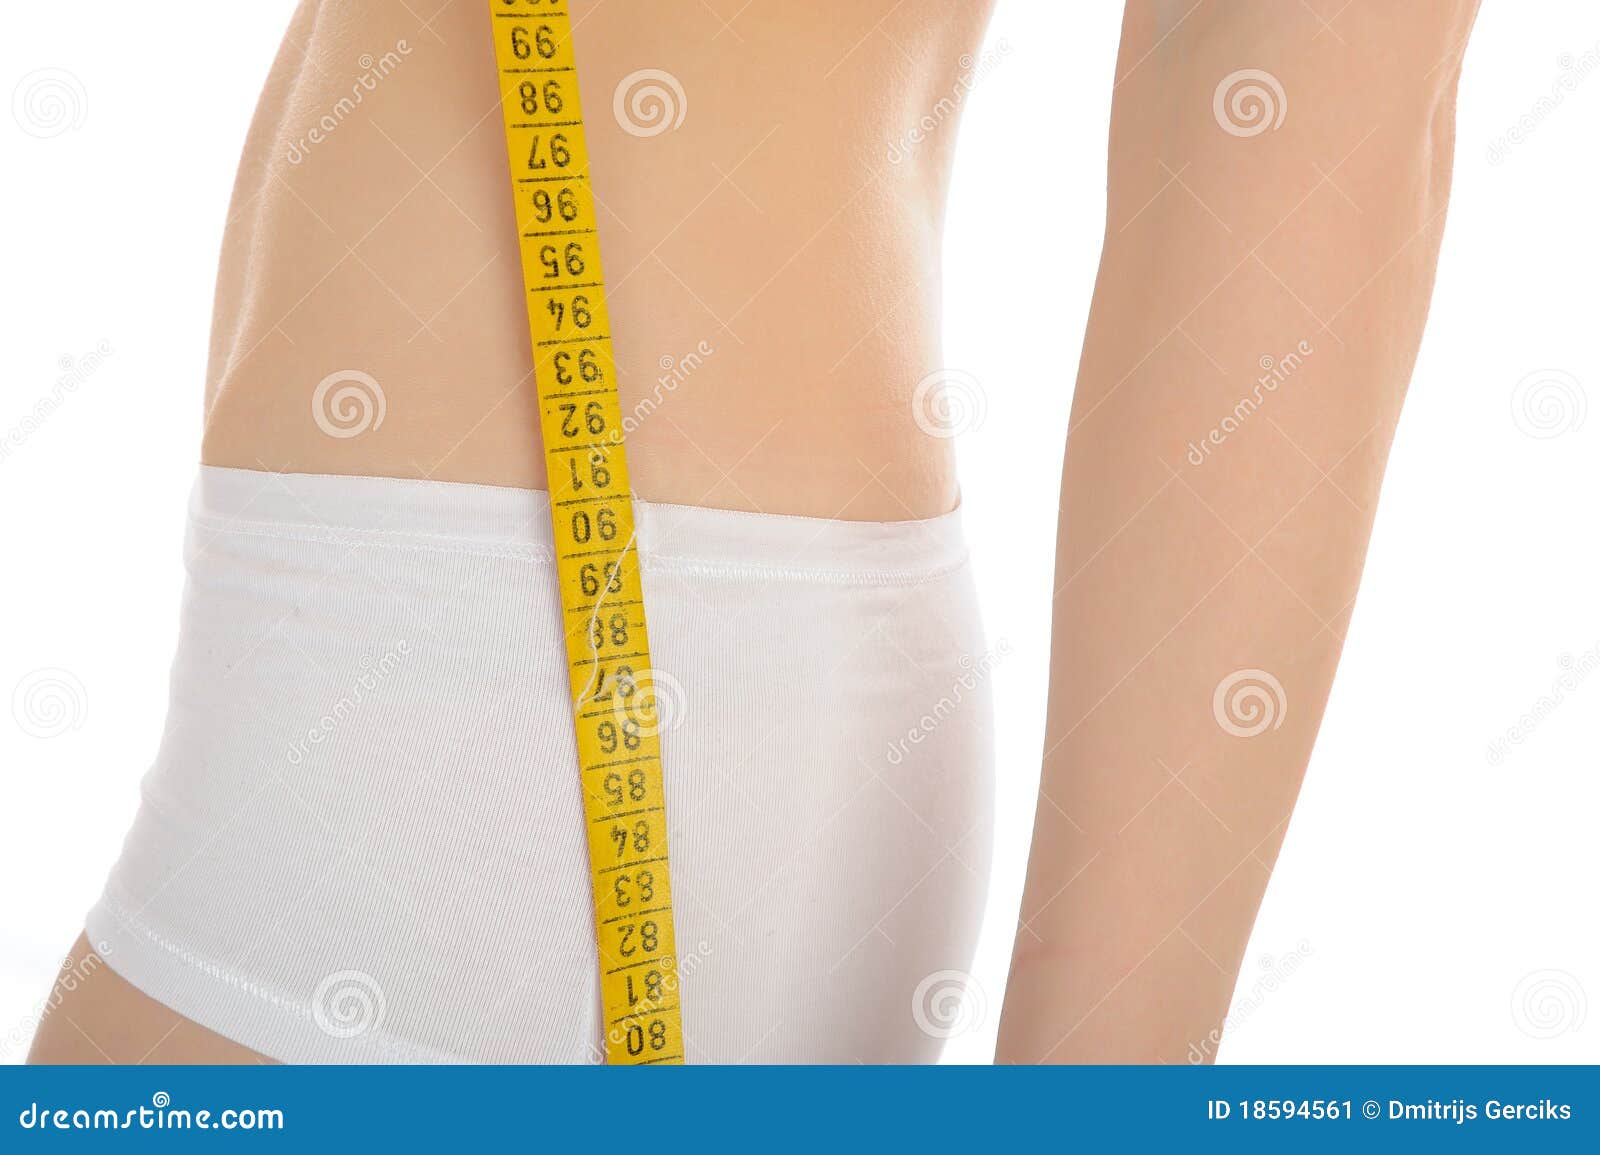 https://thumbs.dreamstime.com/z/beautiful-fit-slim-woman-body-measuring-hips-18594561.jpg